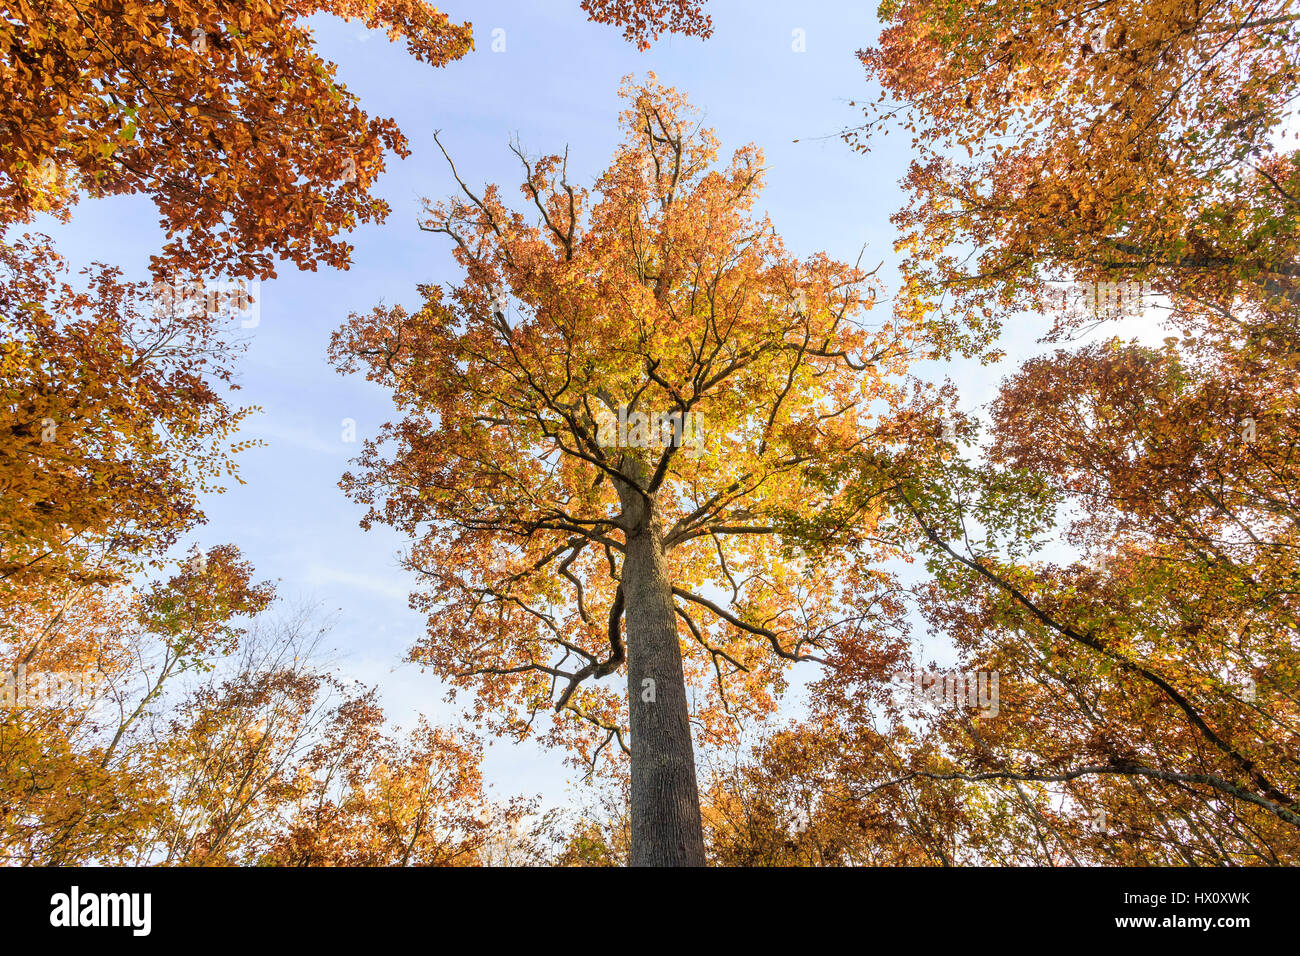 In Francia, in barrique di rovere di Allier, Tronçais foresta, Saint-Bonnet-Troncais, notevole quercia sessile Stebbing in autunno (Quercus petraea) Foto Stock